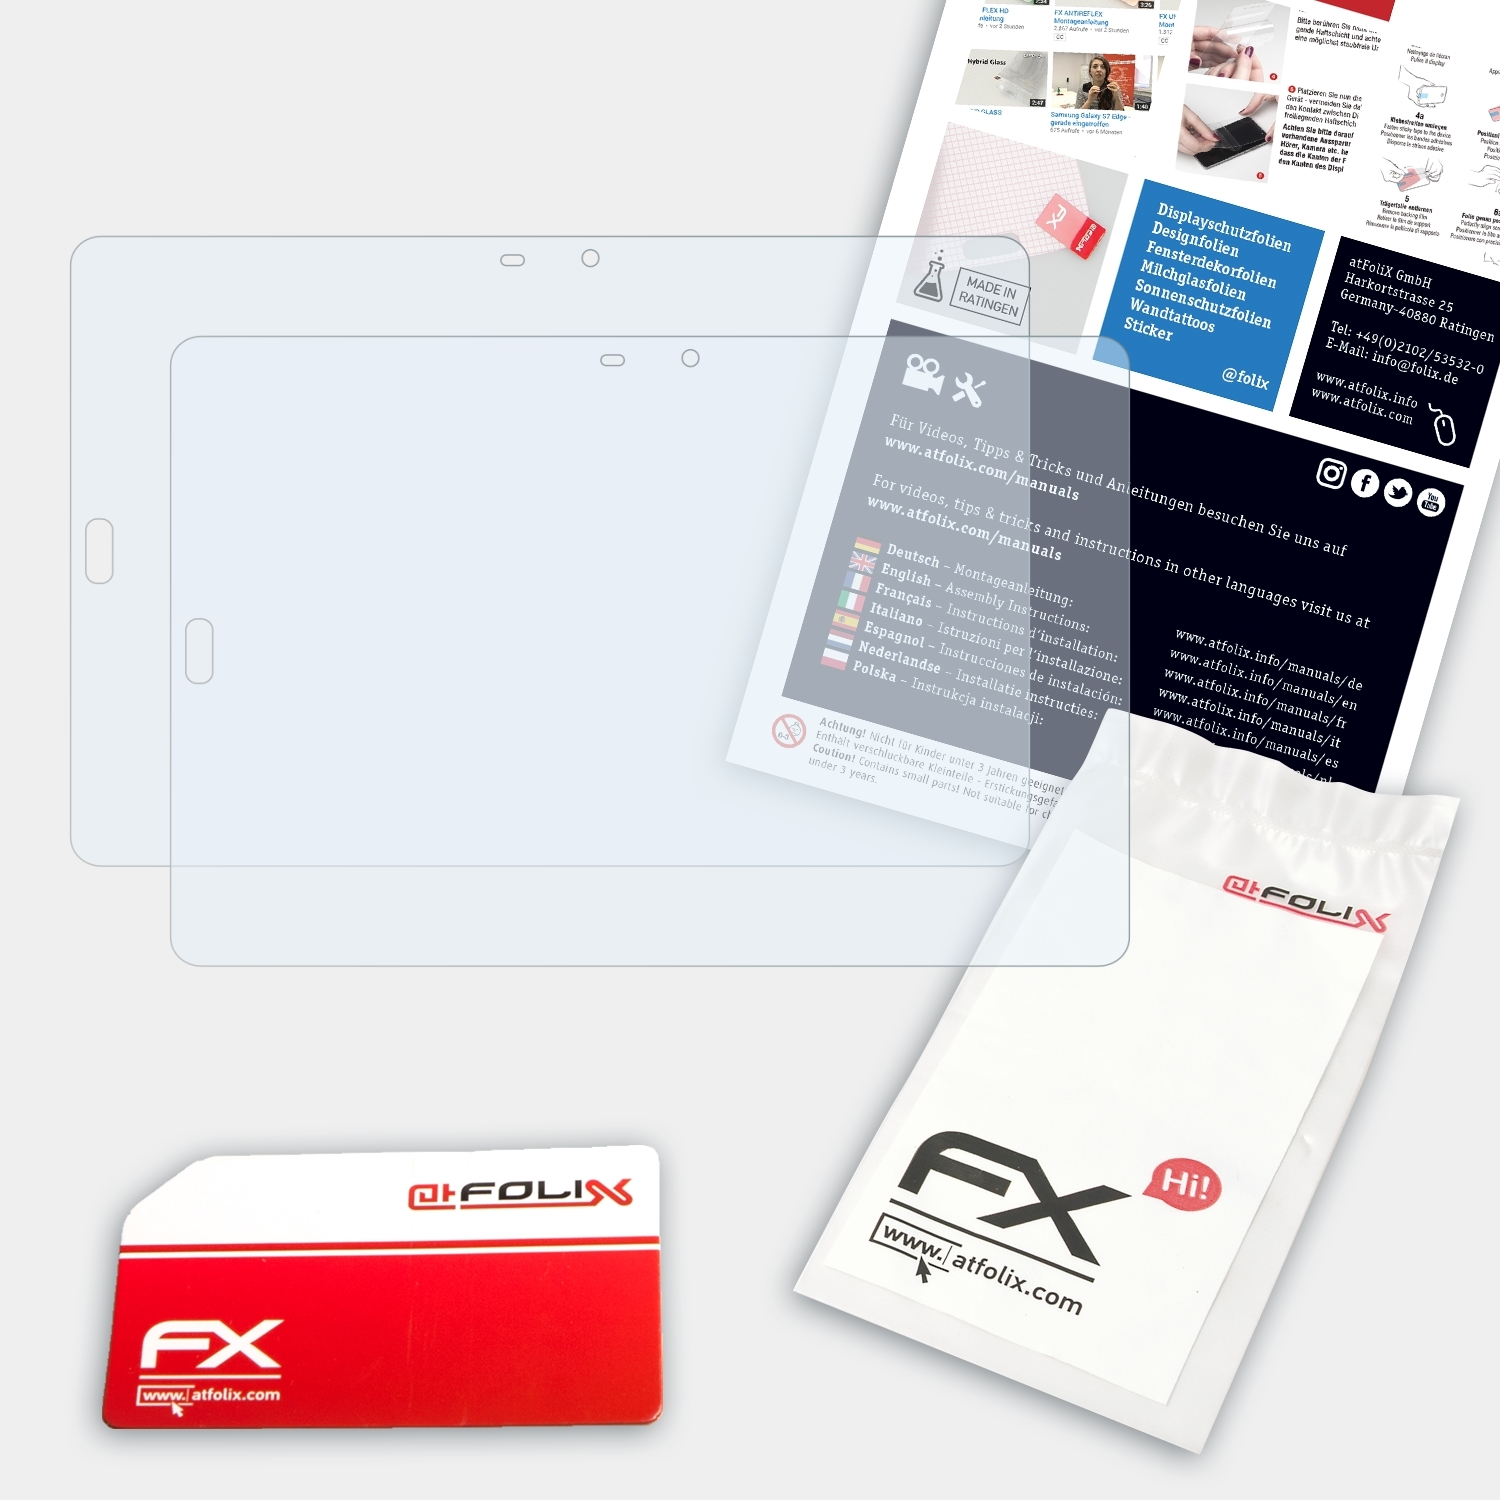 ATFOLIX Onda Pro) FX-Clear V10 2x Displayschutz(für